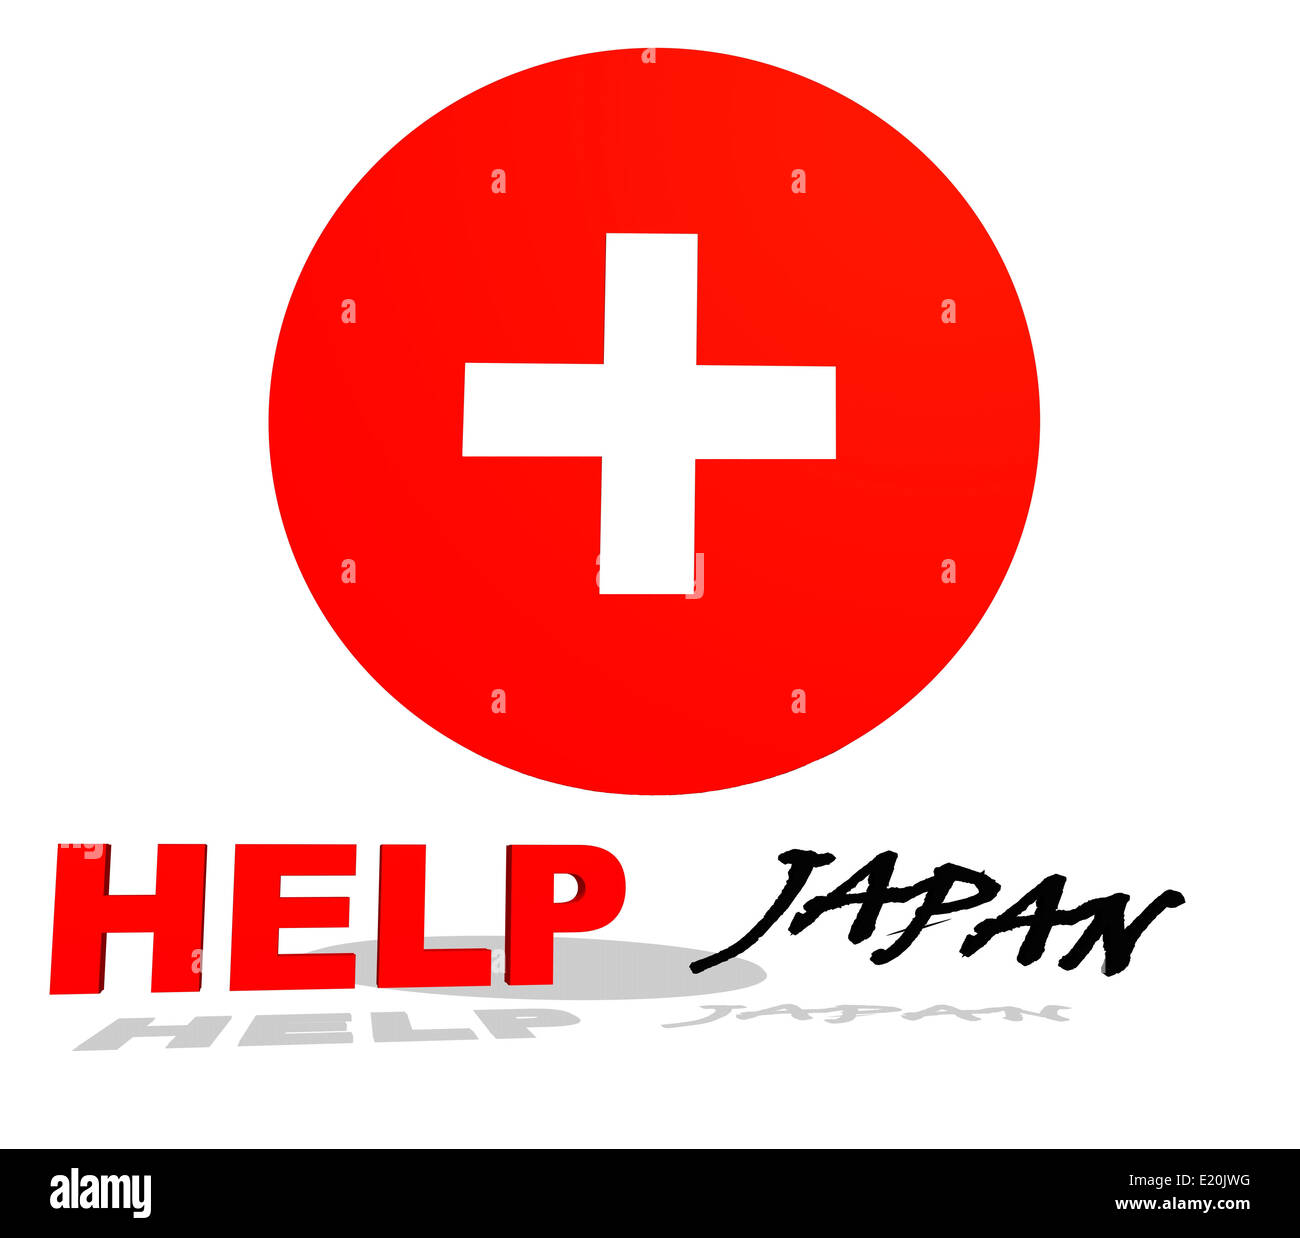 Help Japan square Stock Photo